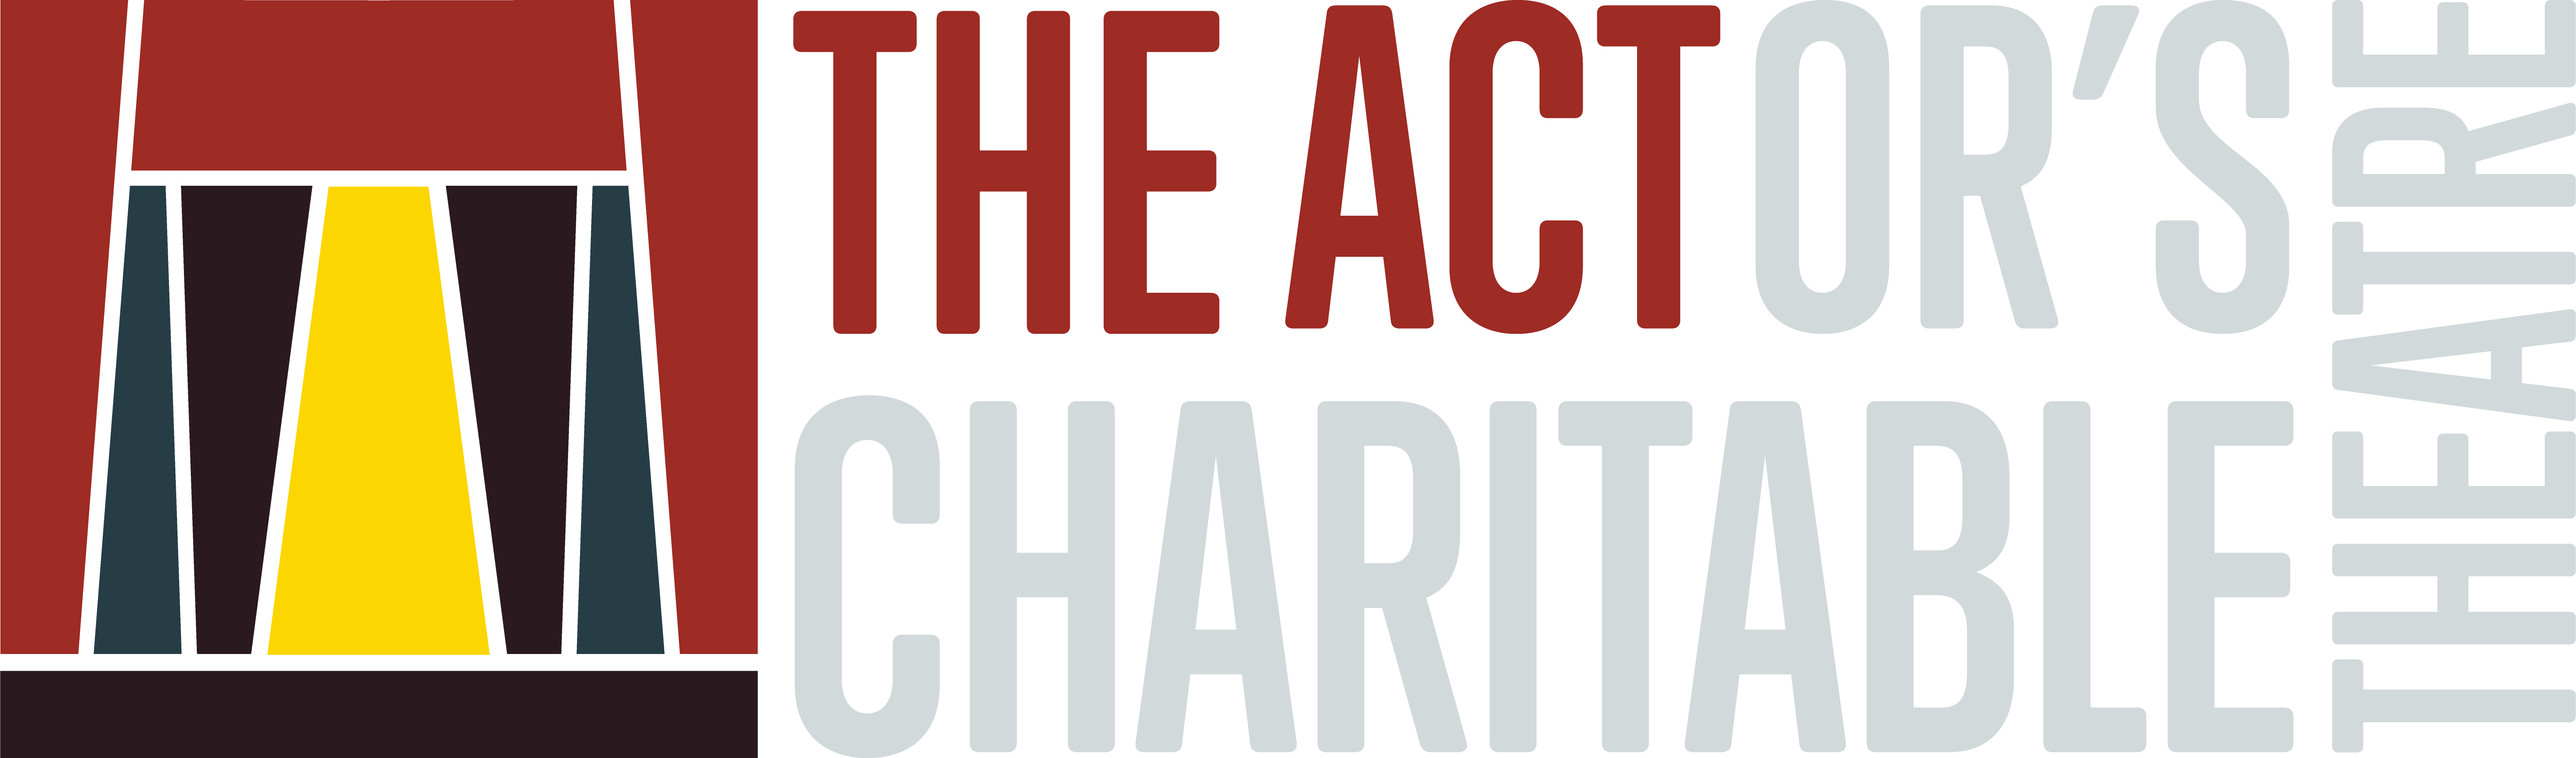 The Actor's Charitable Theatre - Actors Charitable Theatre (6022x1771), Png Download